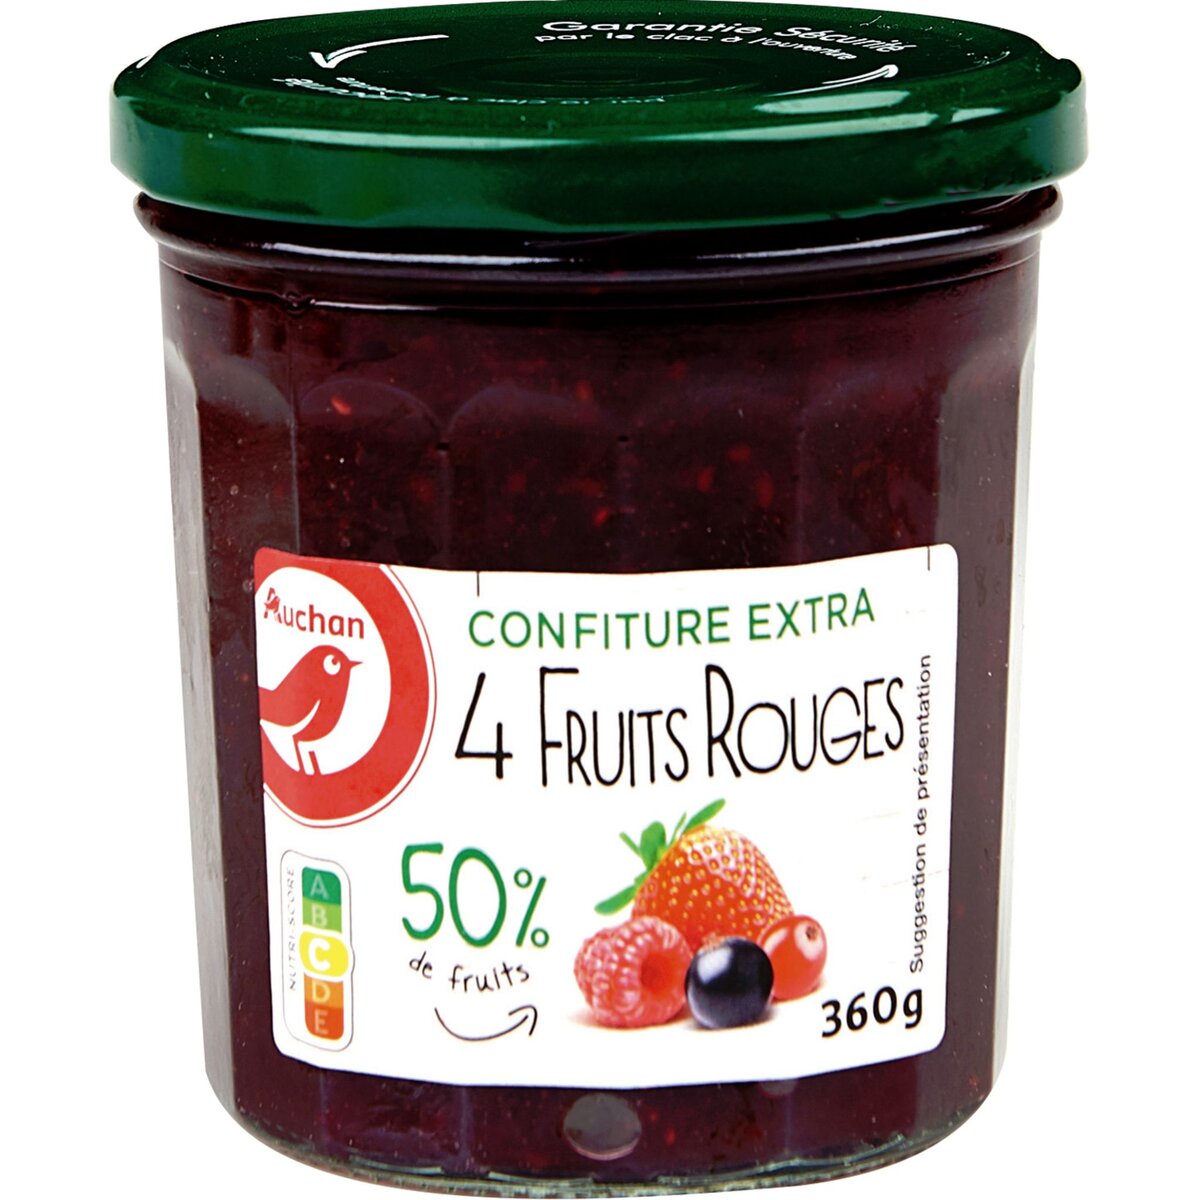 AUCHAN Confiture extra 4 fruits rouges 360g